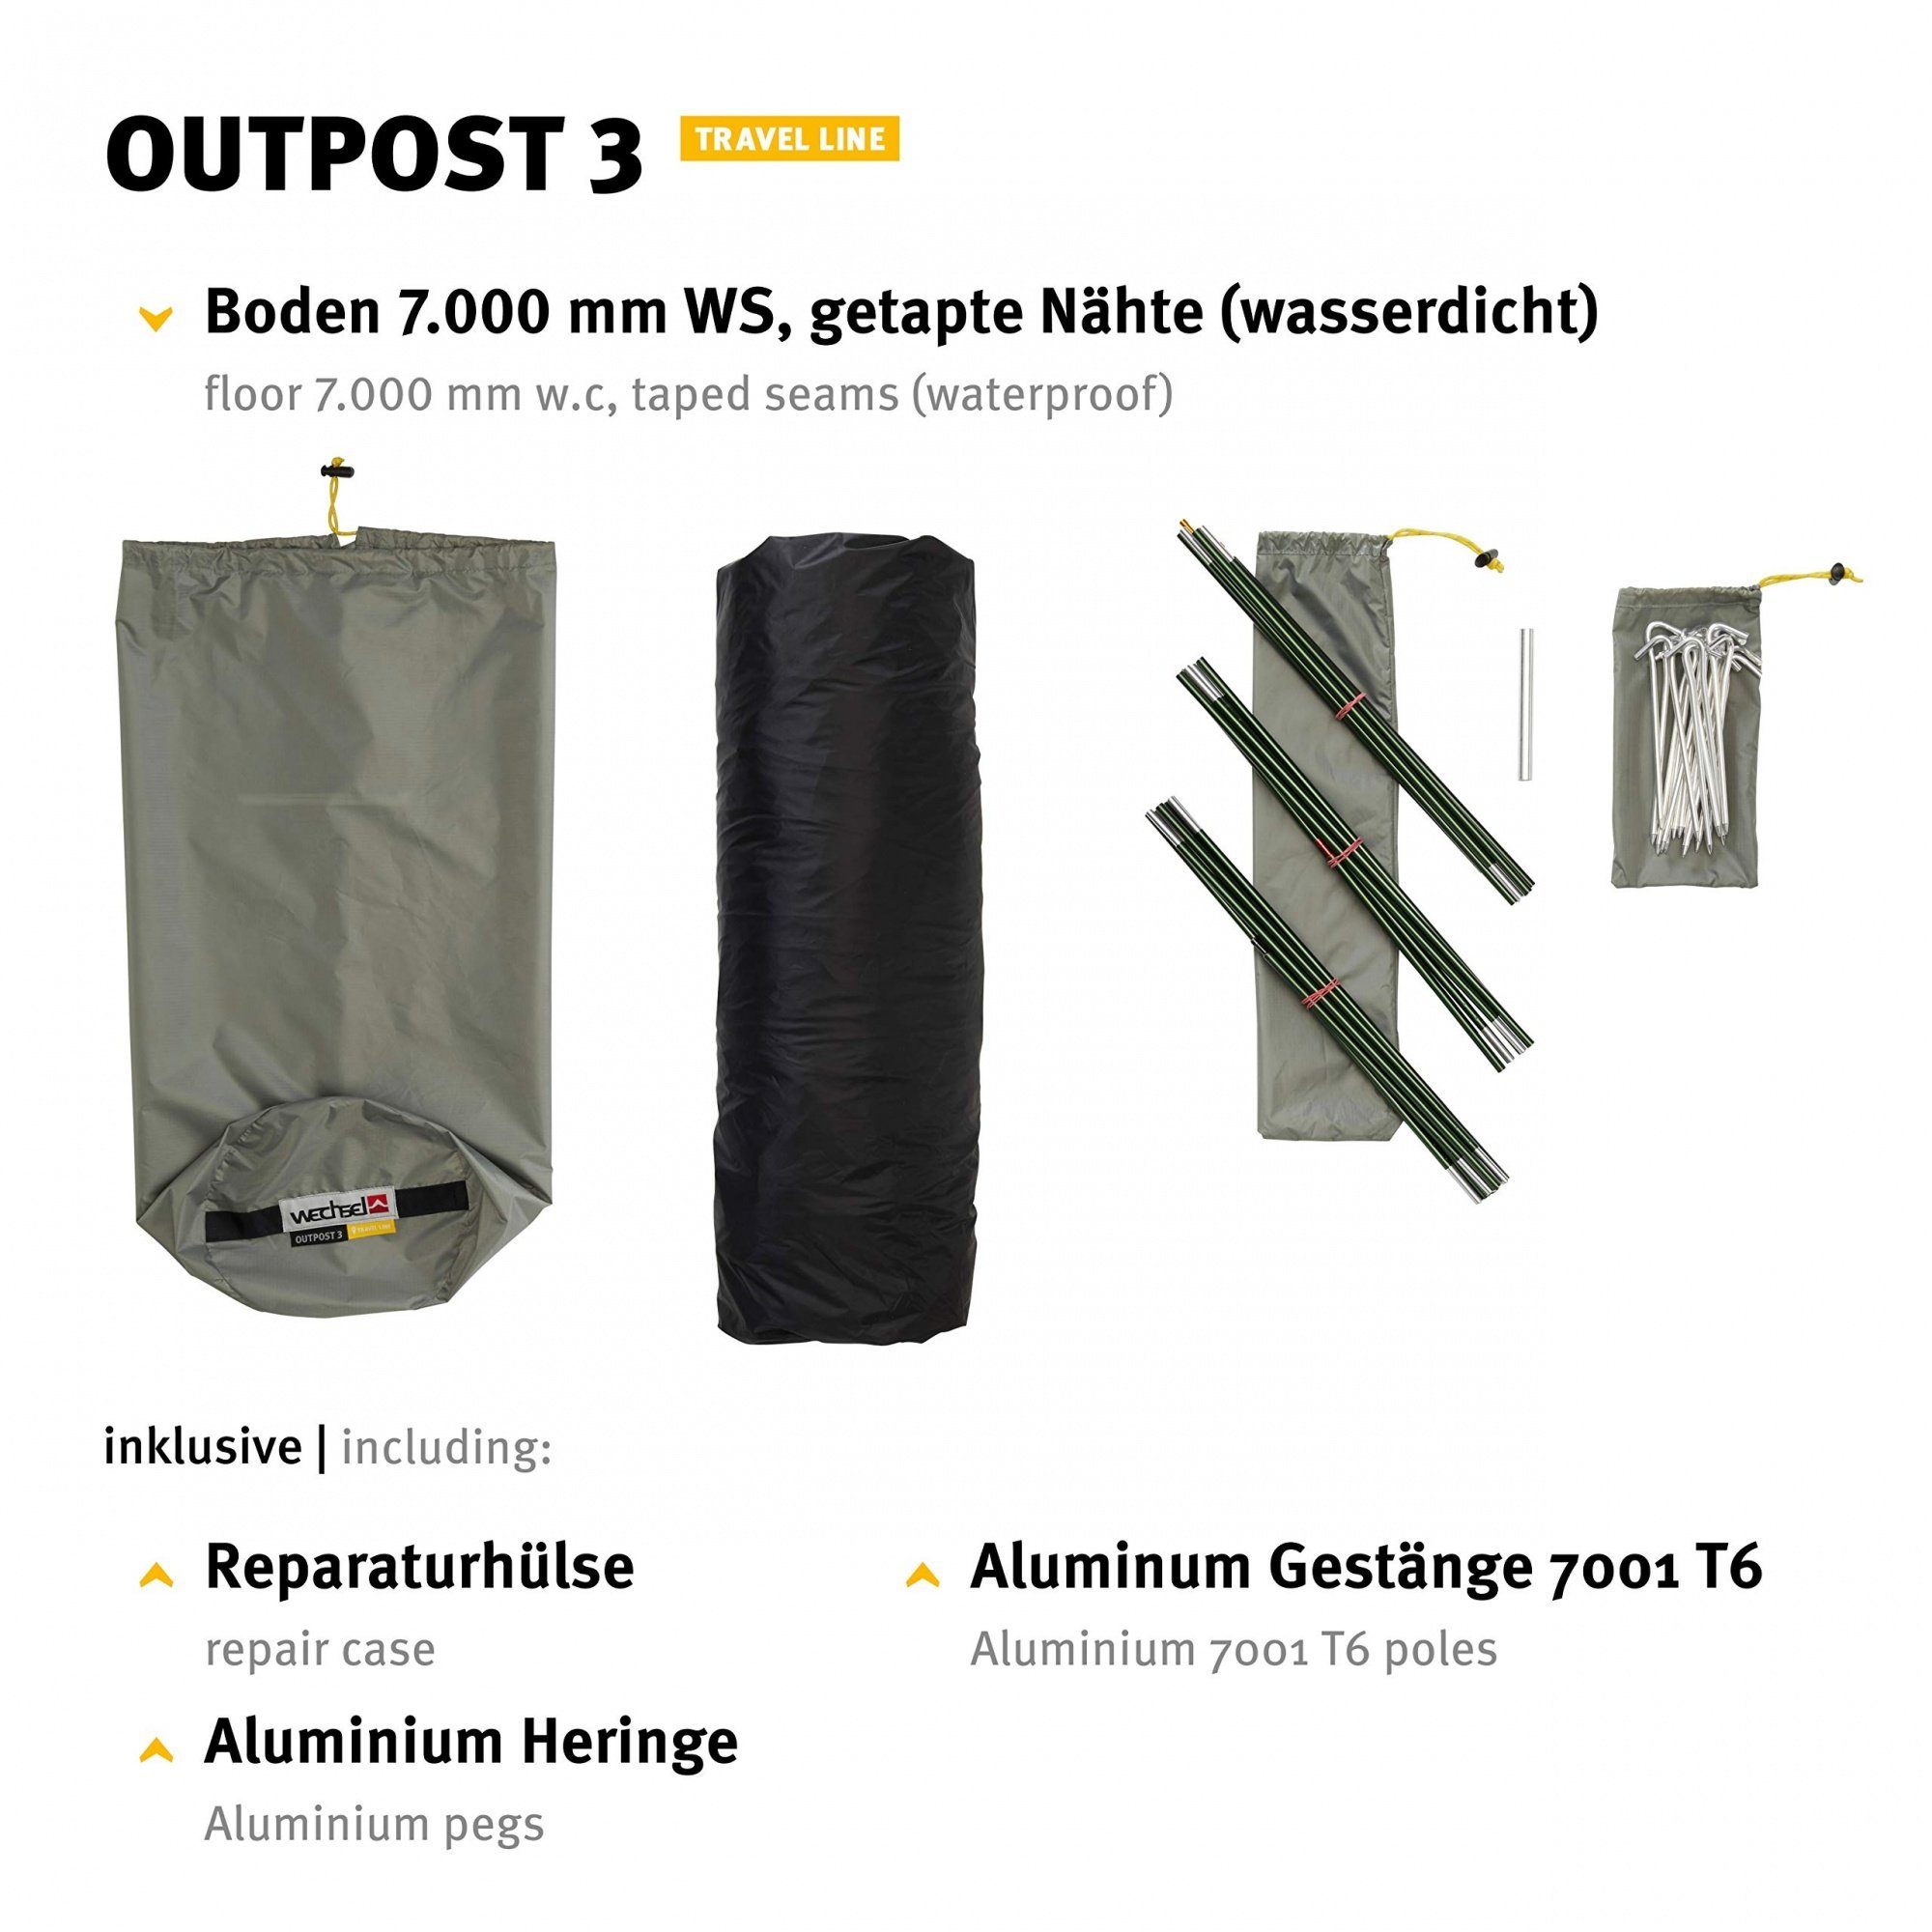 Geräumiges - Wechsel - 3-Personen Outpost 3 Personen: 3 Tents Travel Tunnelzelt Zelt, Line